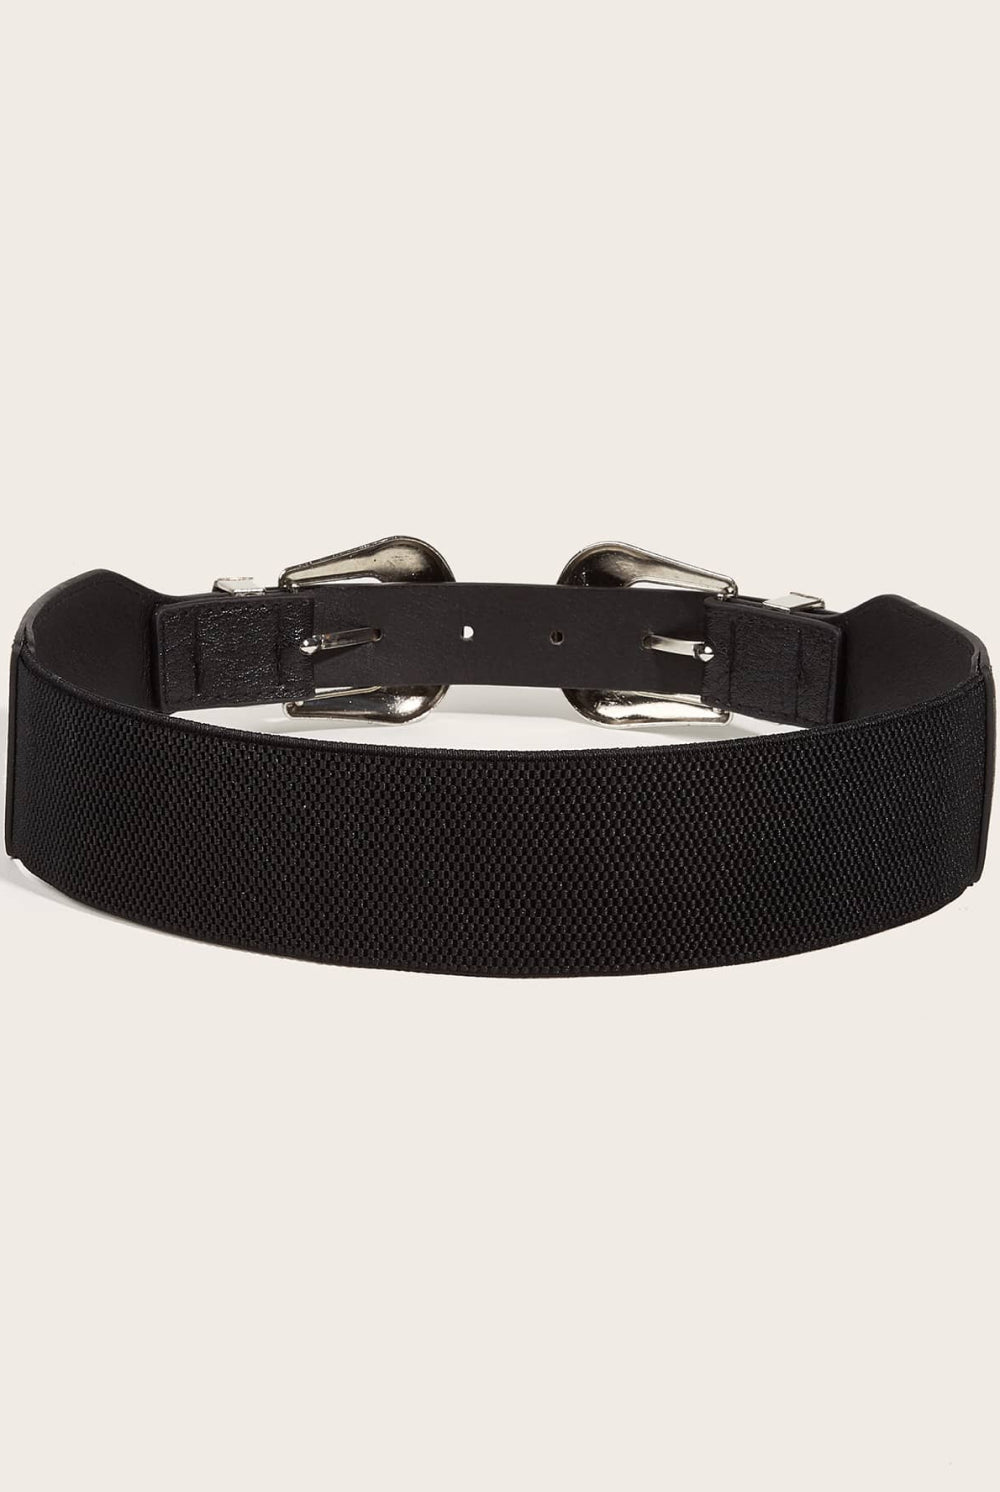 Black Double Buckle PU Leather Belt